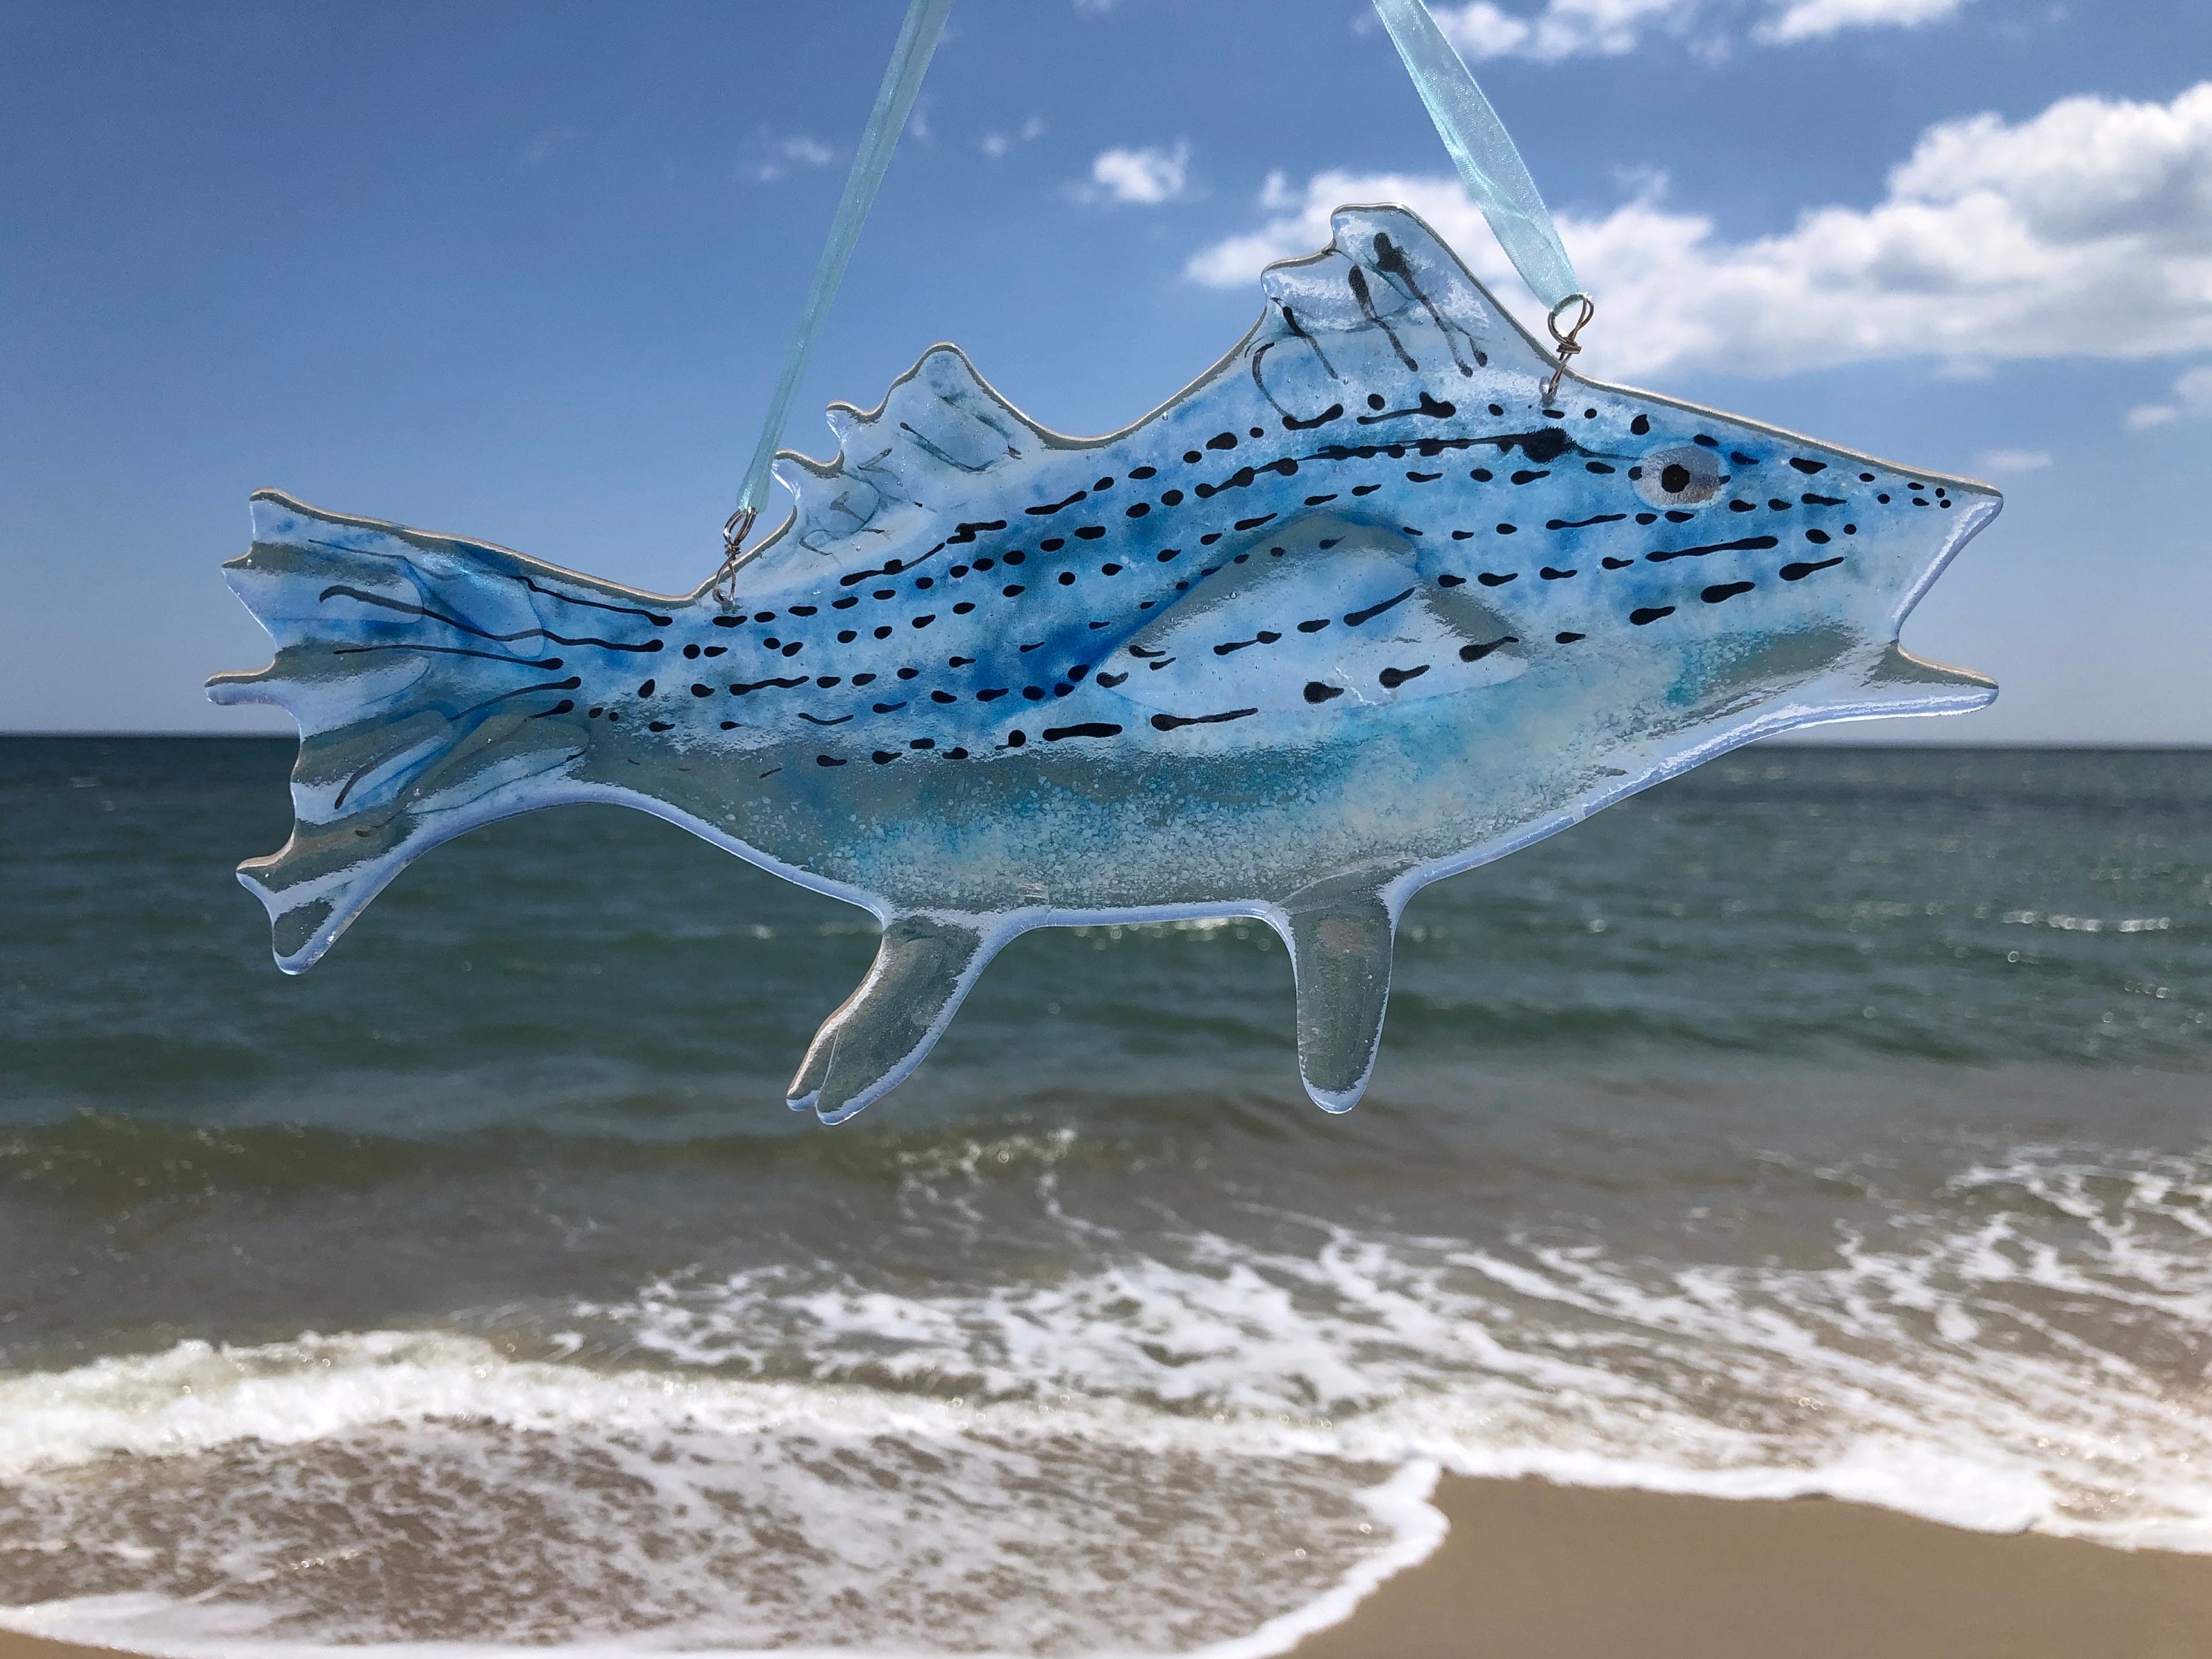 Rockfish Dichroic Glass Sculpture